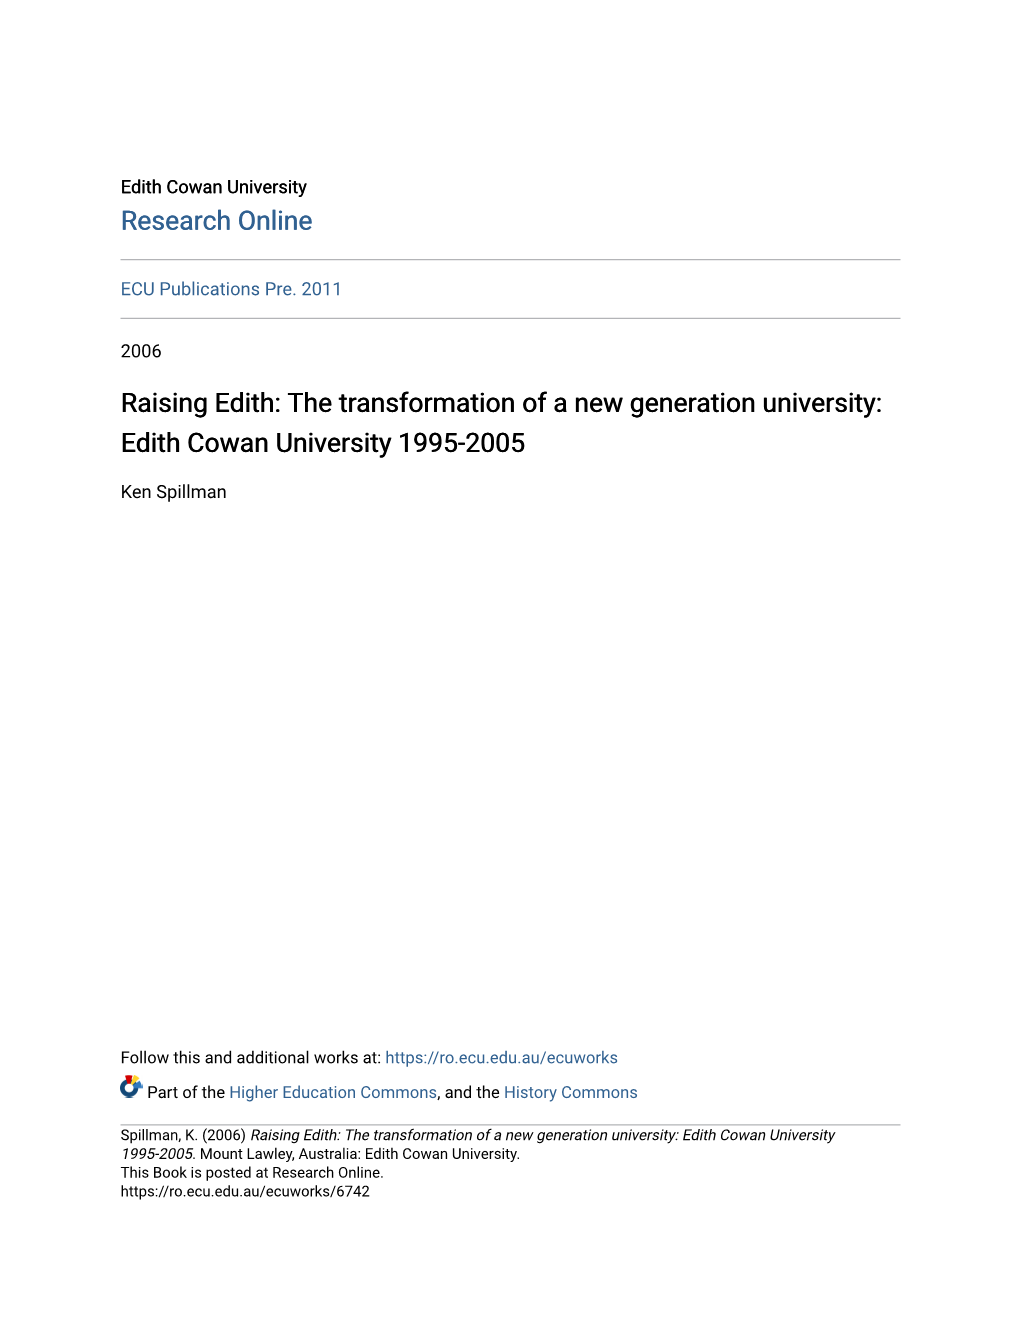 Raising Edith: the Transformation of a New Generation University: Edith Cowan University 1995-2005